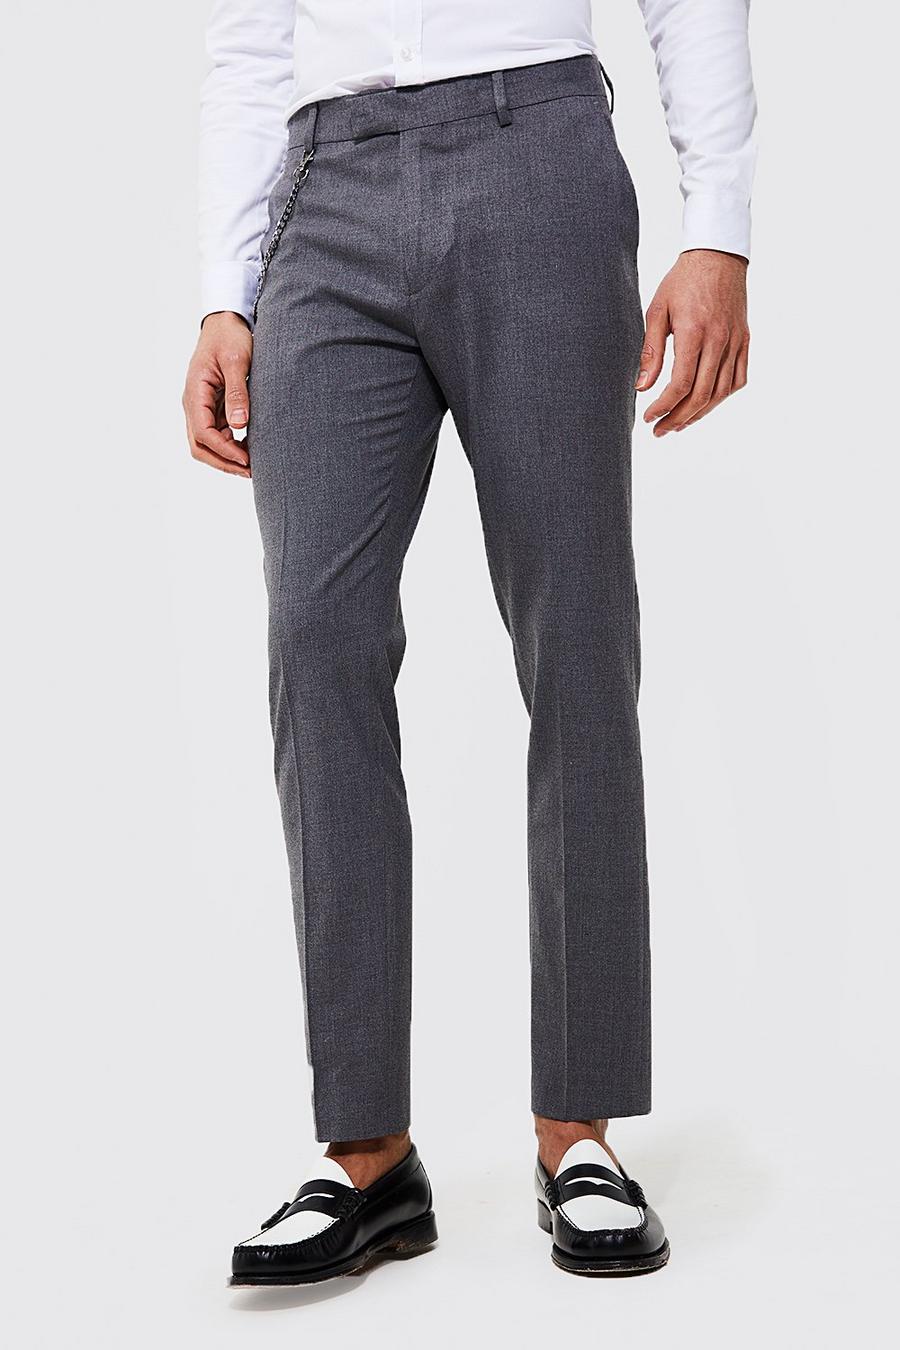 Light grey מכנסיים אלגנטיים חלקים בגזרת סקיני עם שרשרת